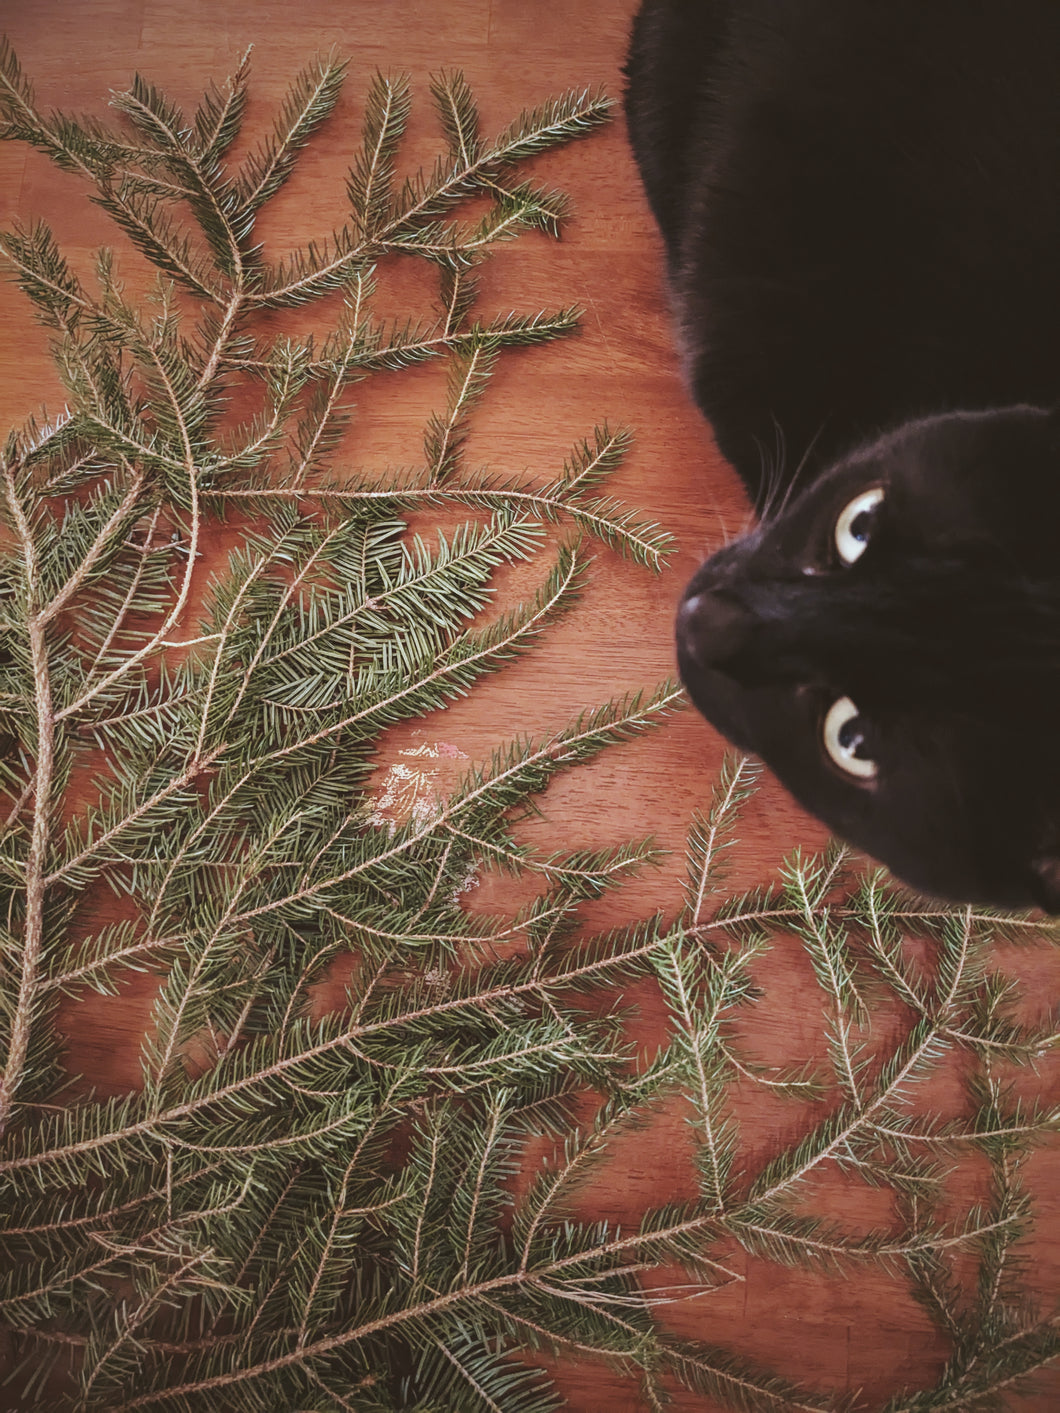 Black Cat. natural forest perfume. smoke, wild clove, lavender, frangipani, herbs, moss